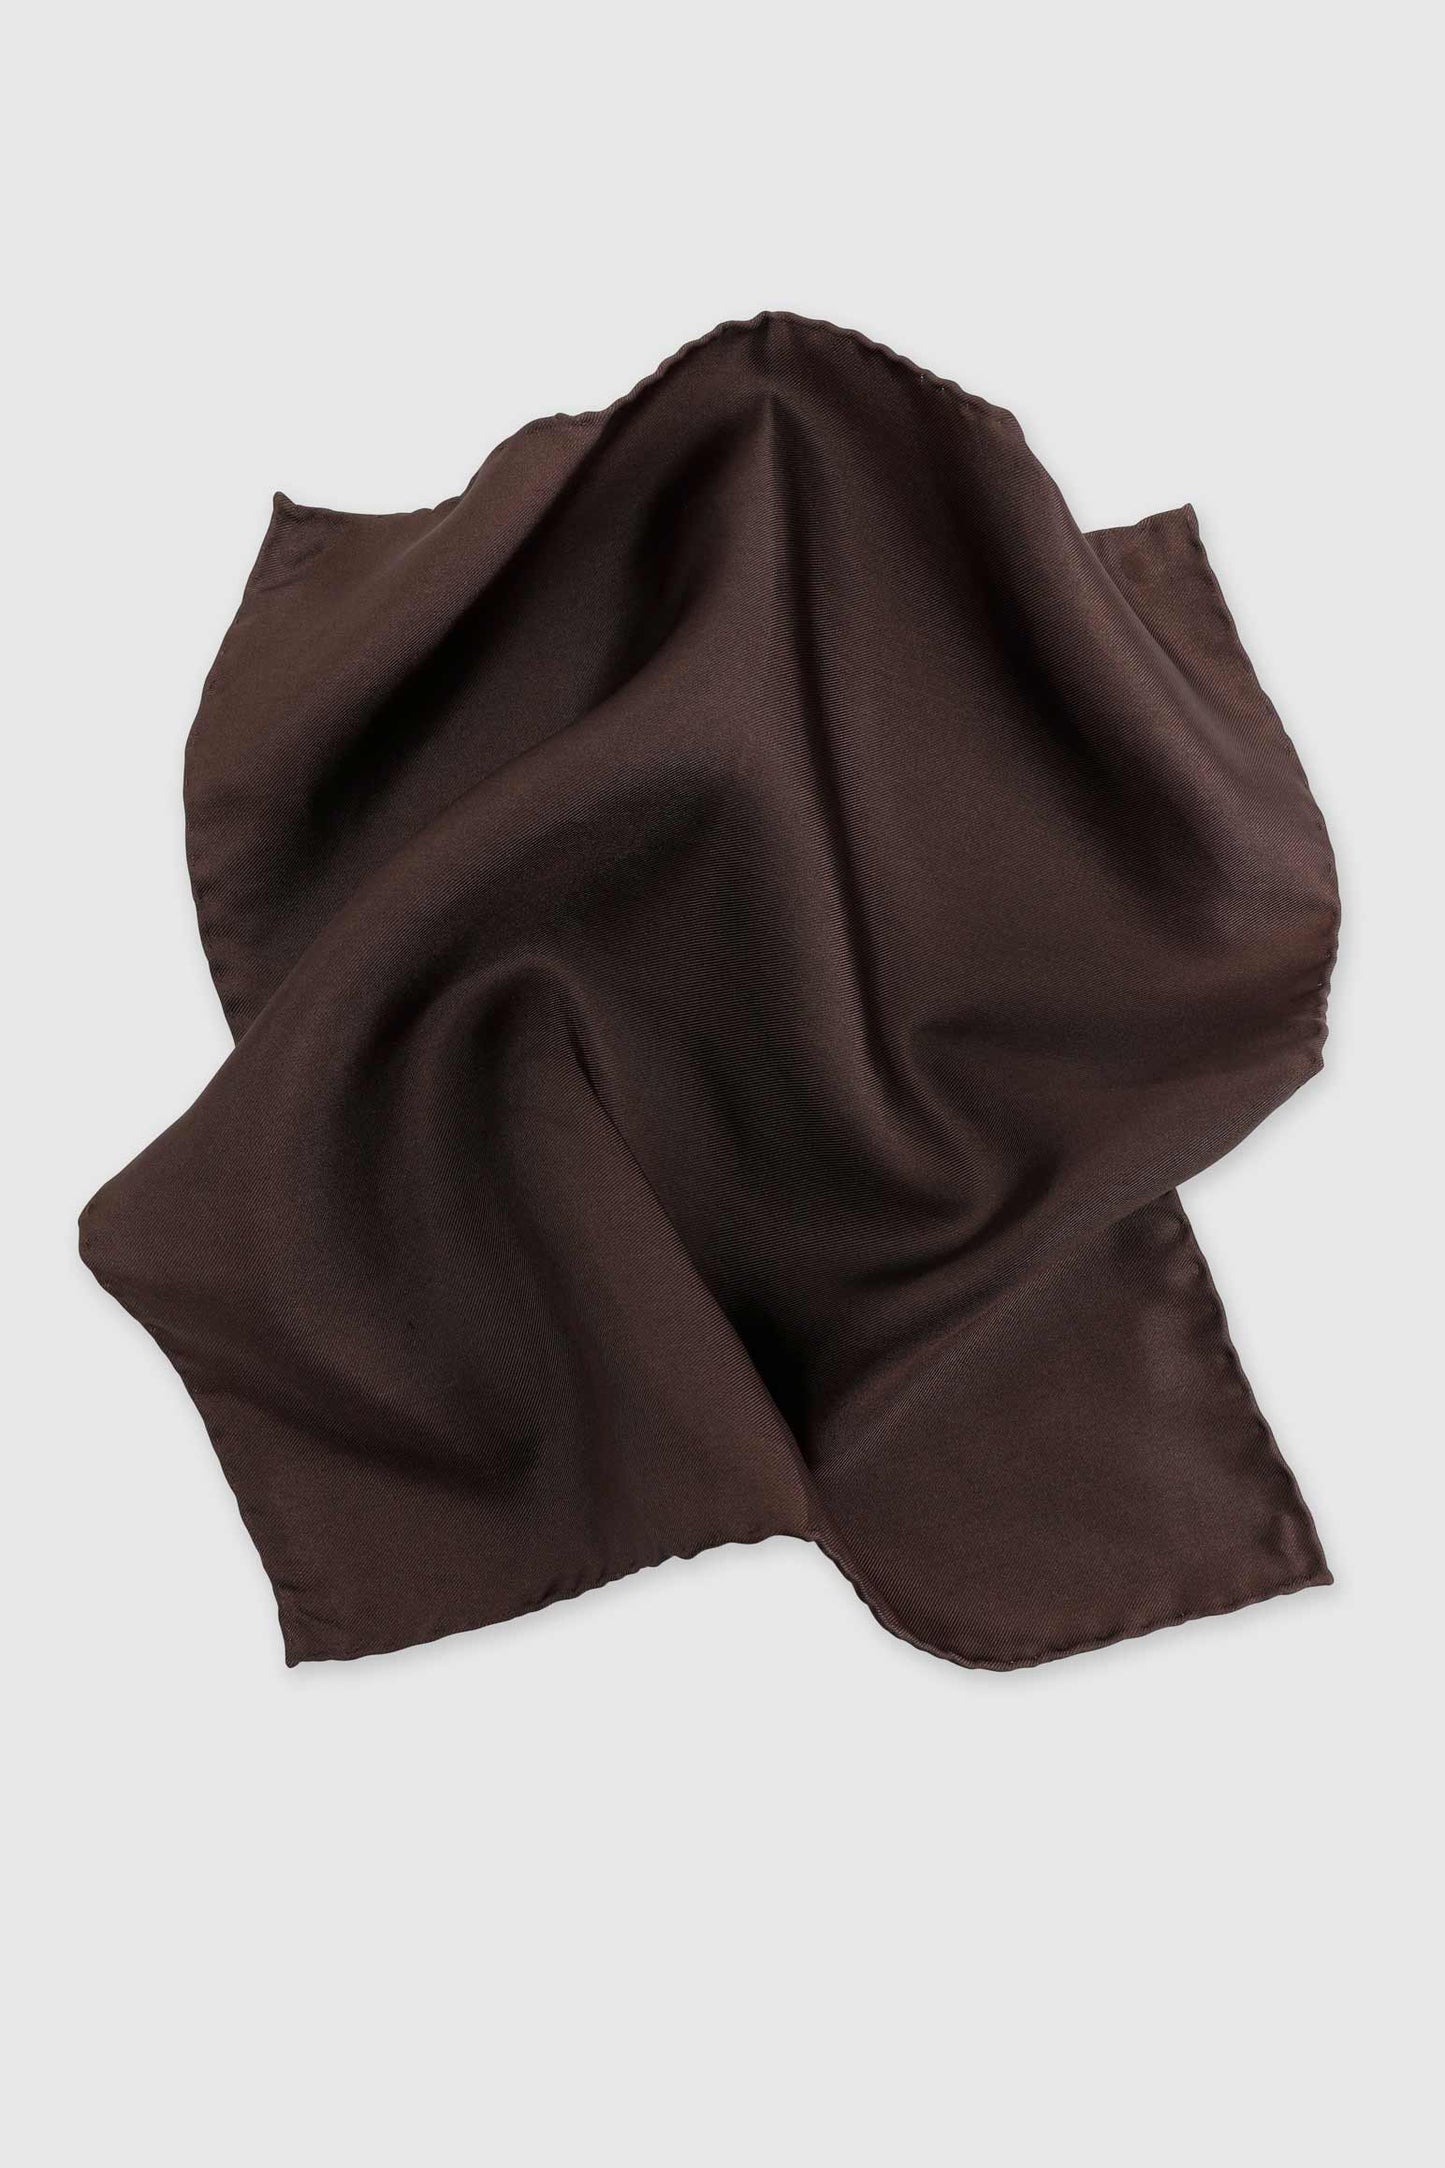 100% Silk Handmade Pocket Square Brown